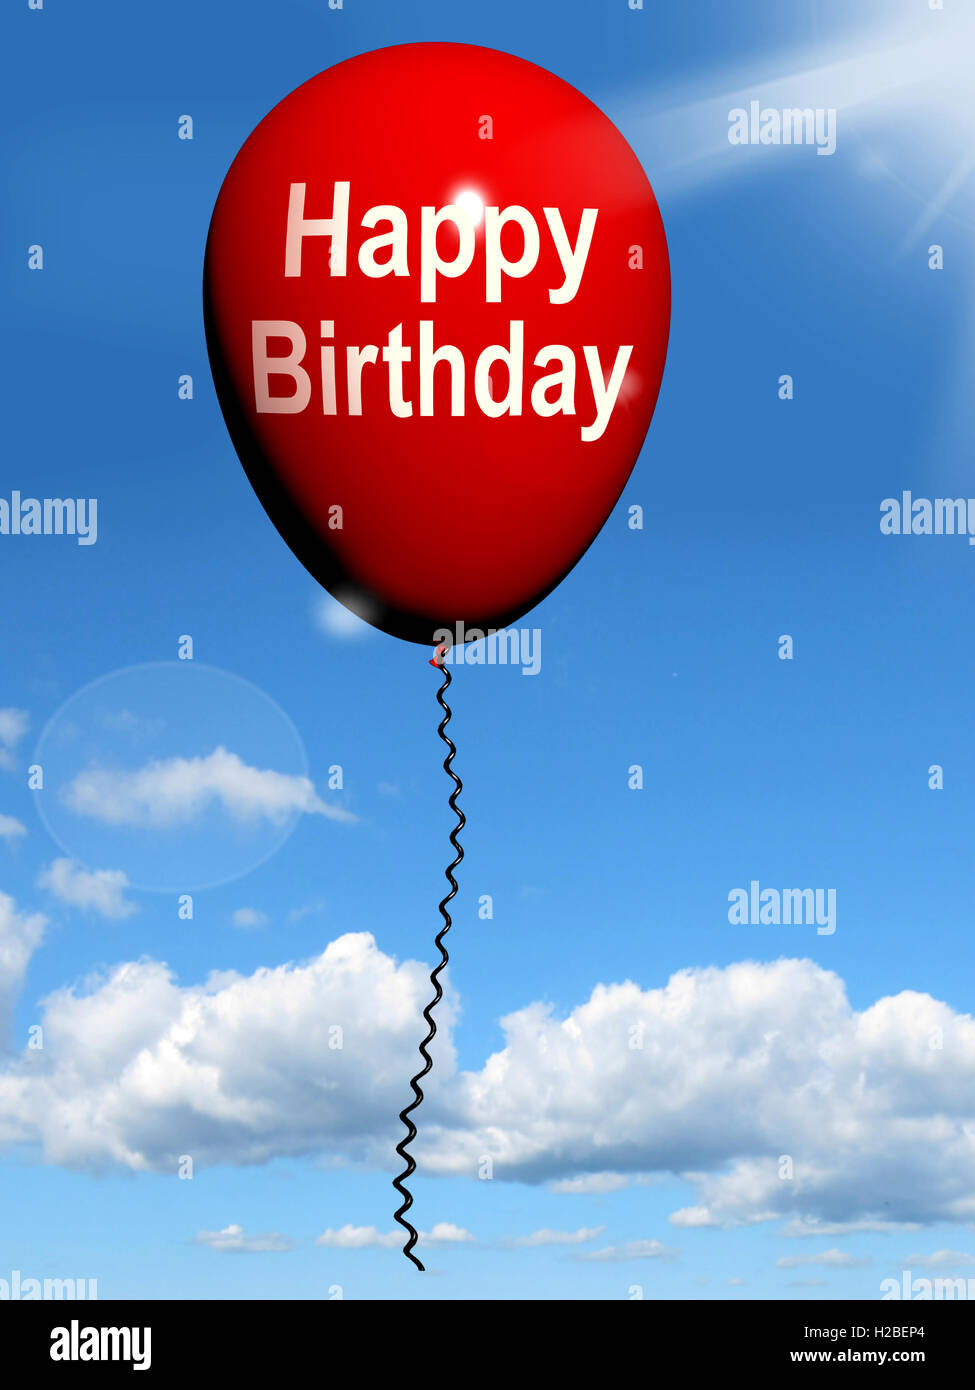 Happy Birthday Balloon Shows Cheerful Festivities and Parties Stock Photo